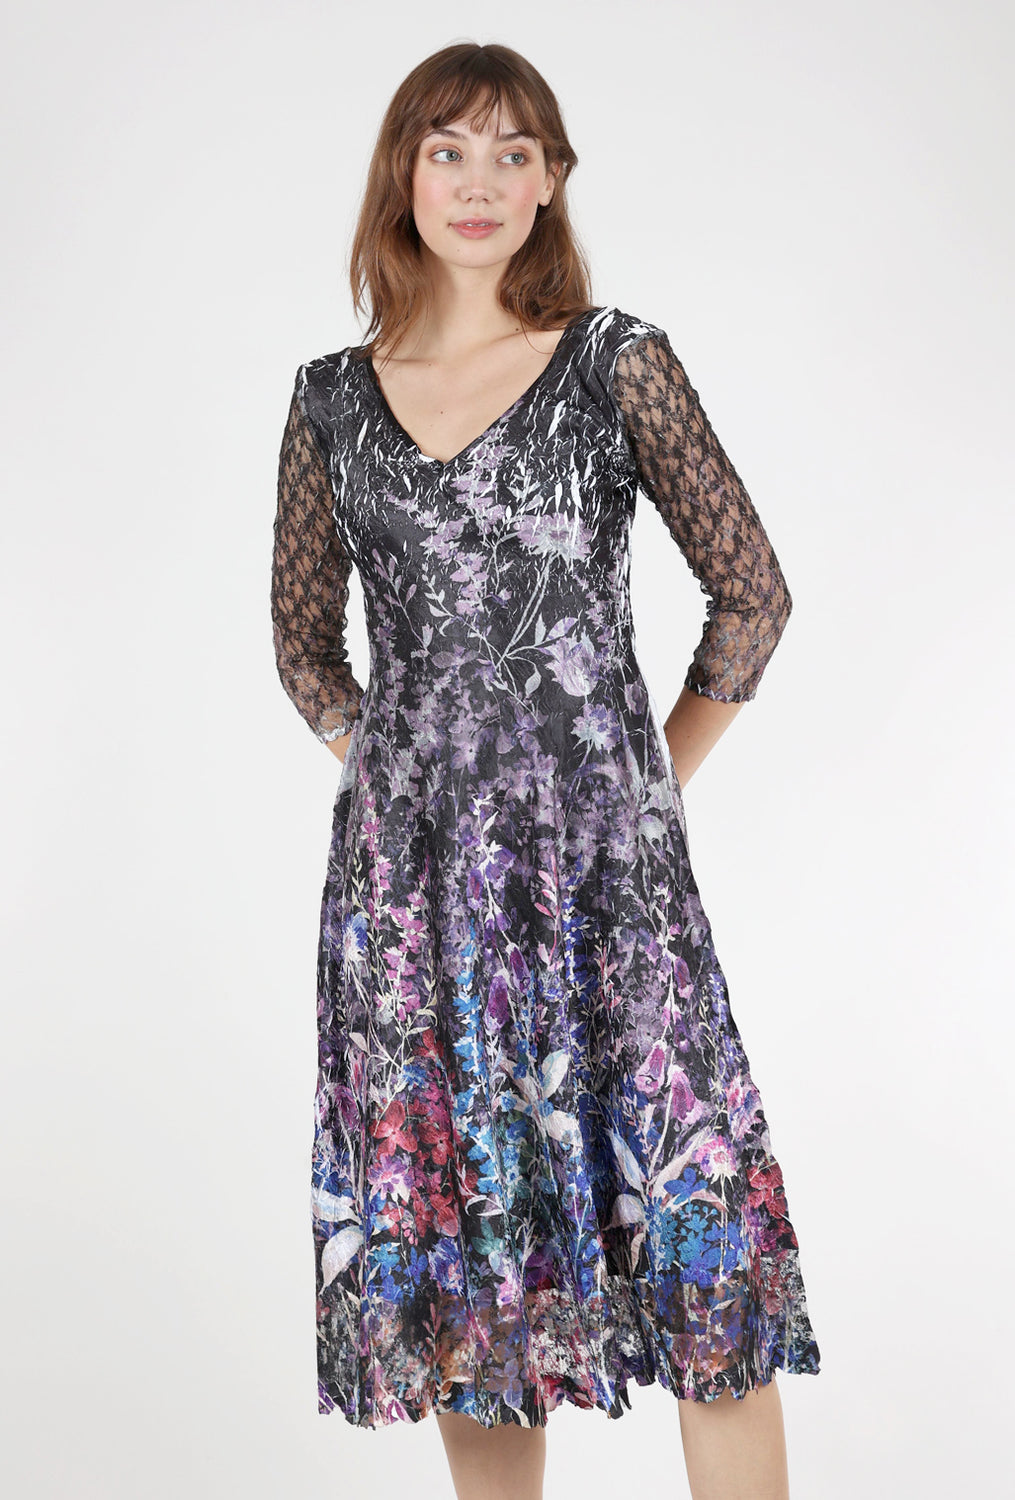 Komarov Lace-Sleeve Monarch Dress, Garden 